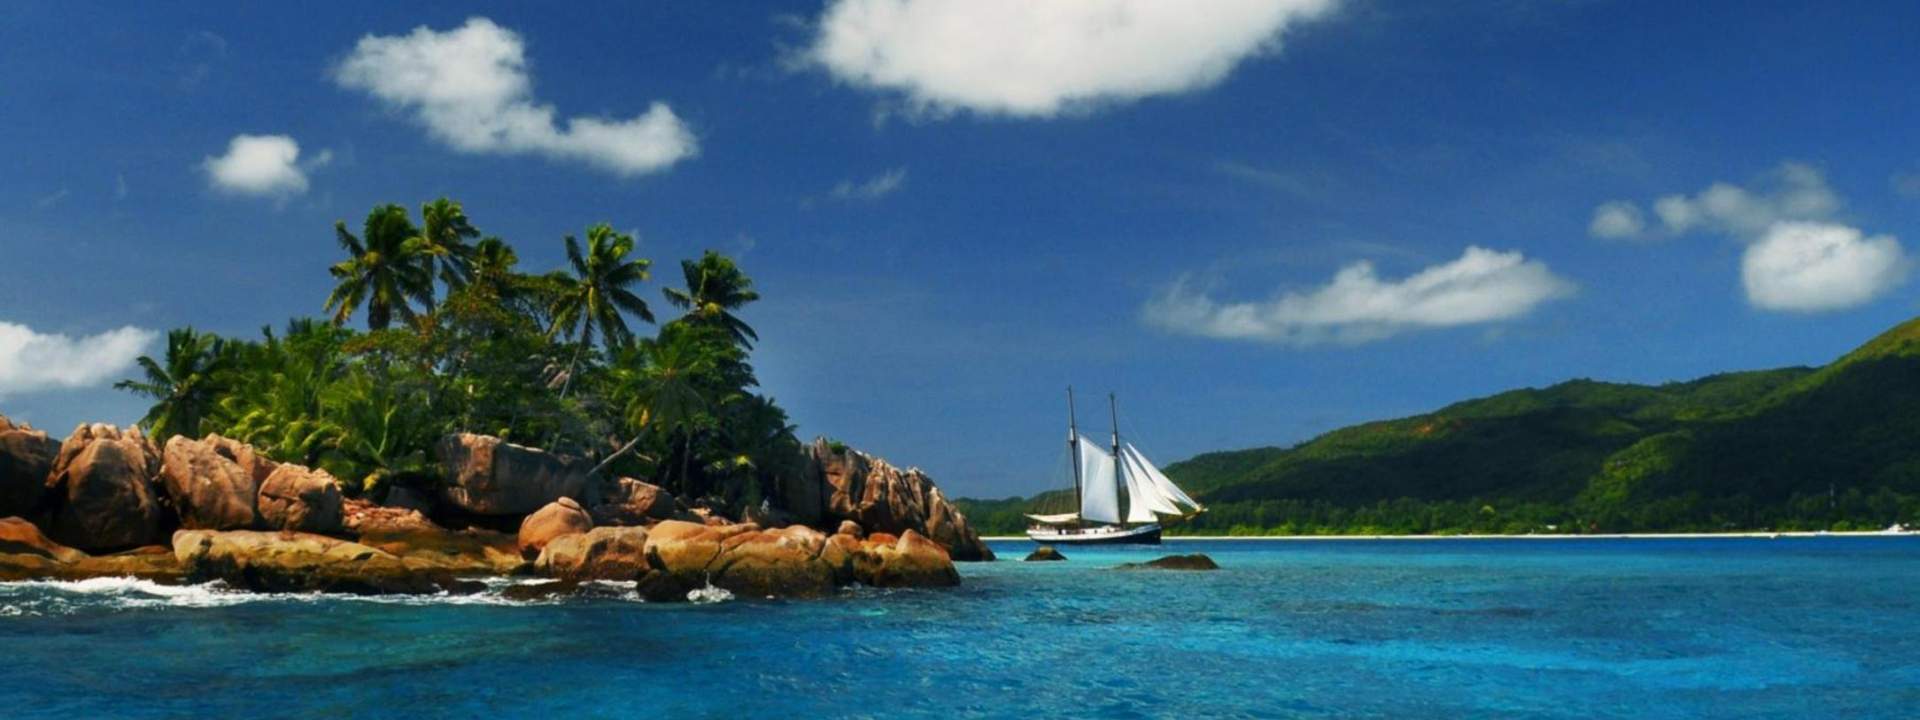 Cruise the Seychelles archipelago by gulet